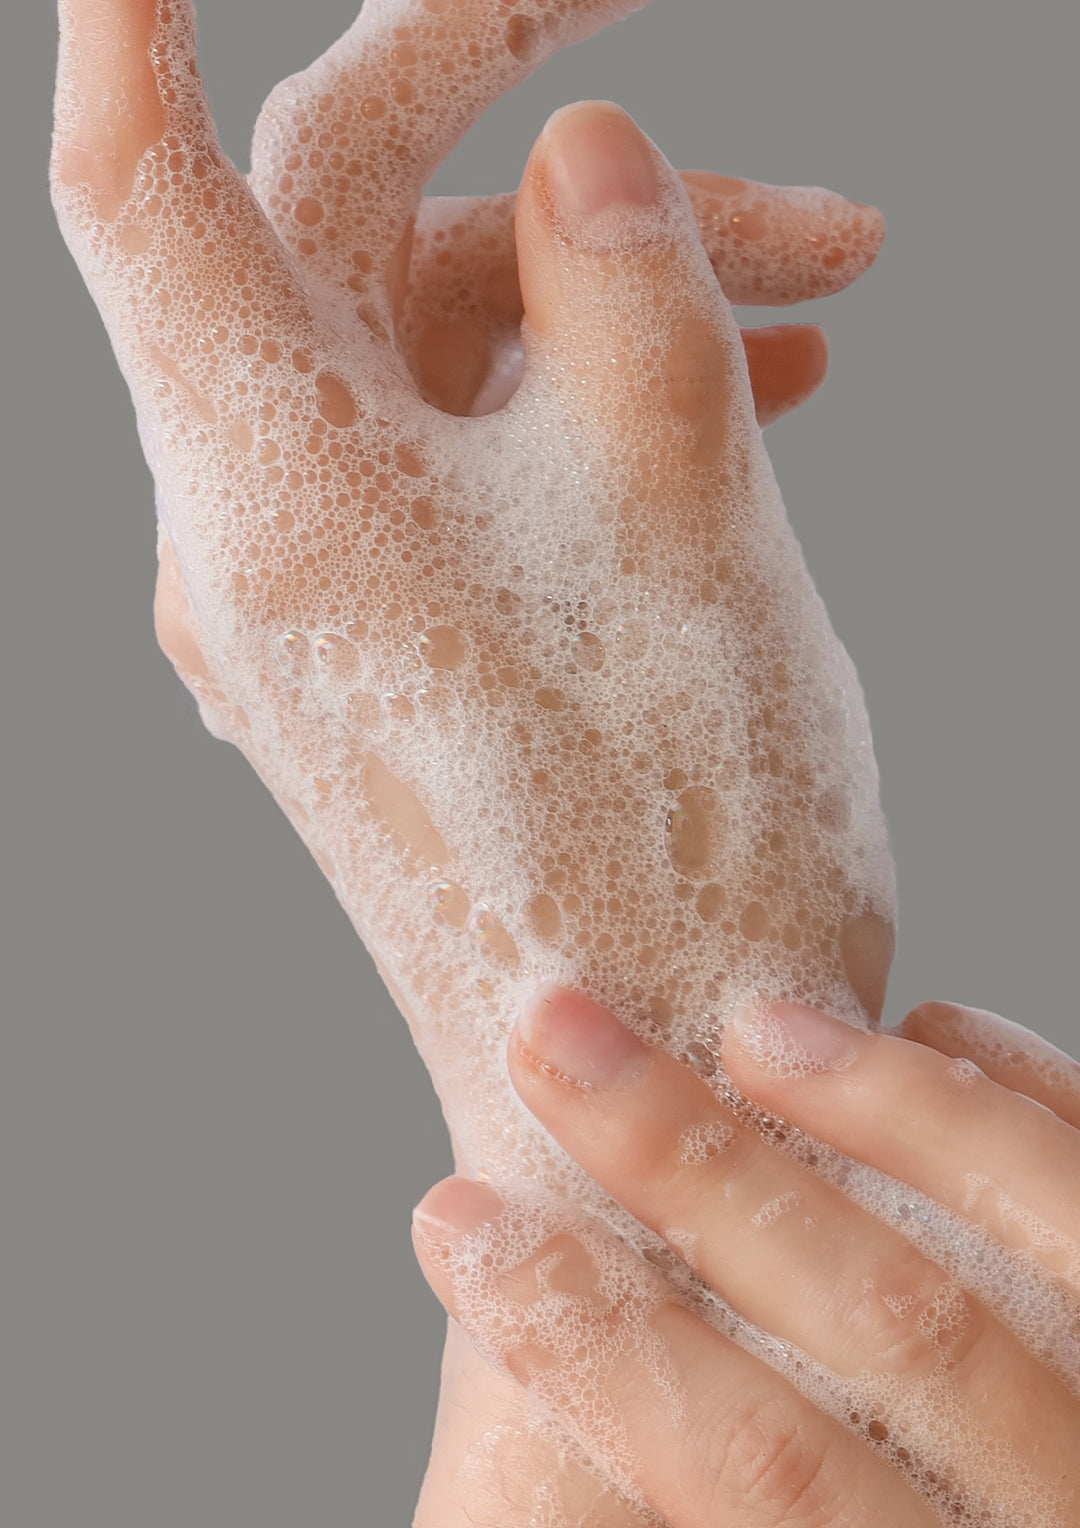 Naturals Hand & Body Wash - Neroli & Amber Wood